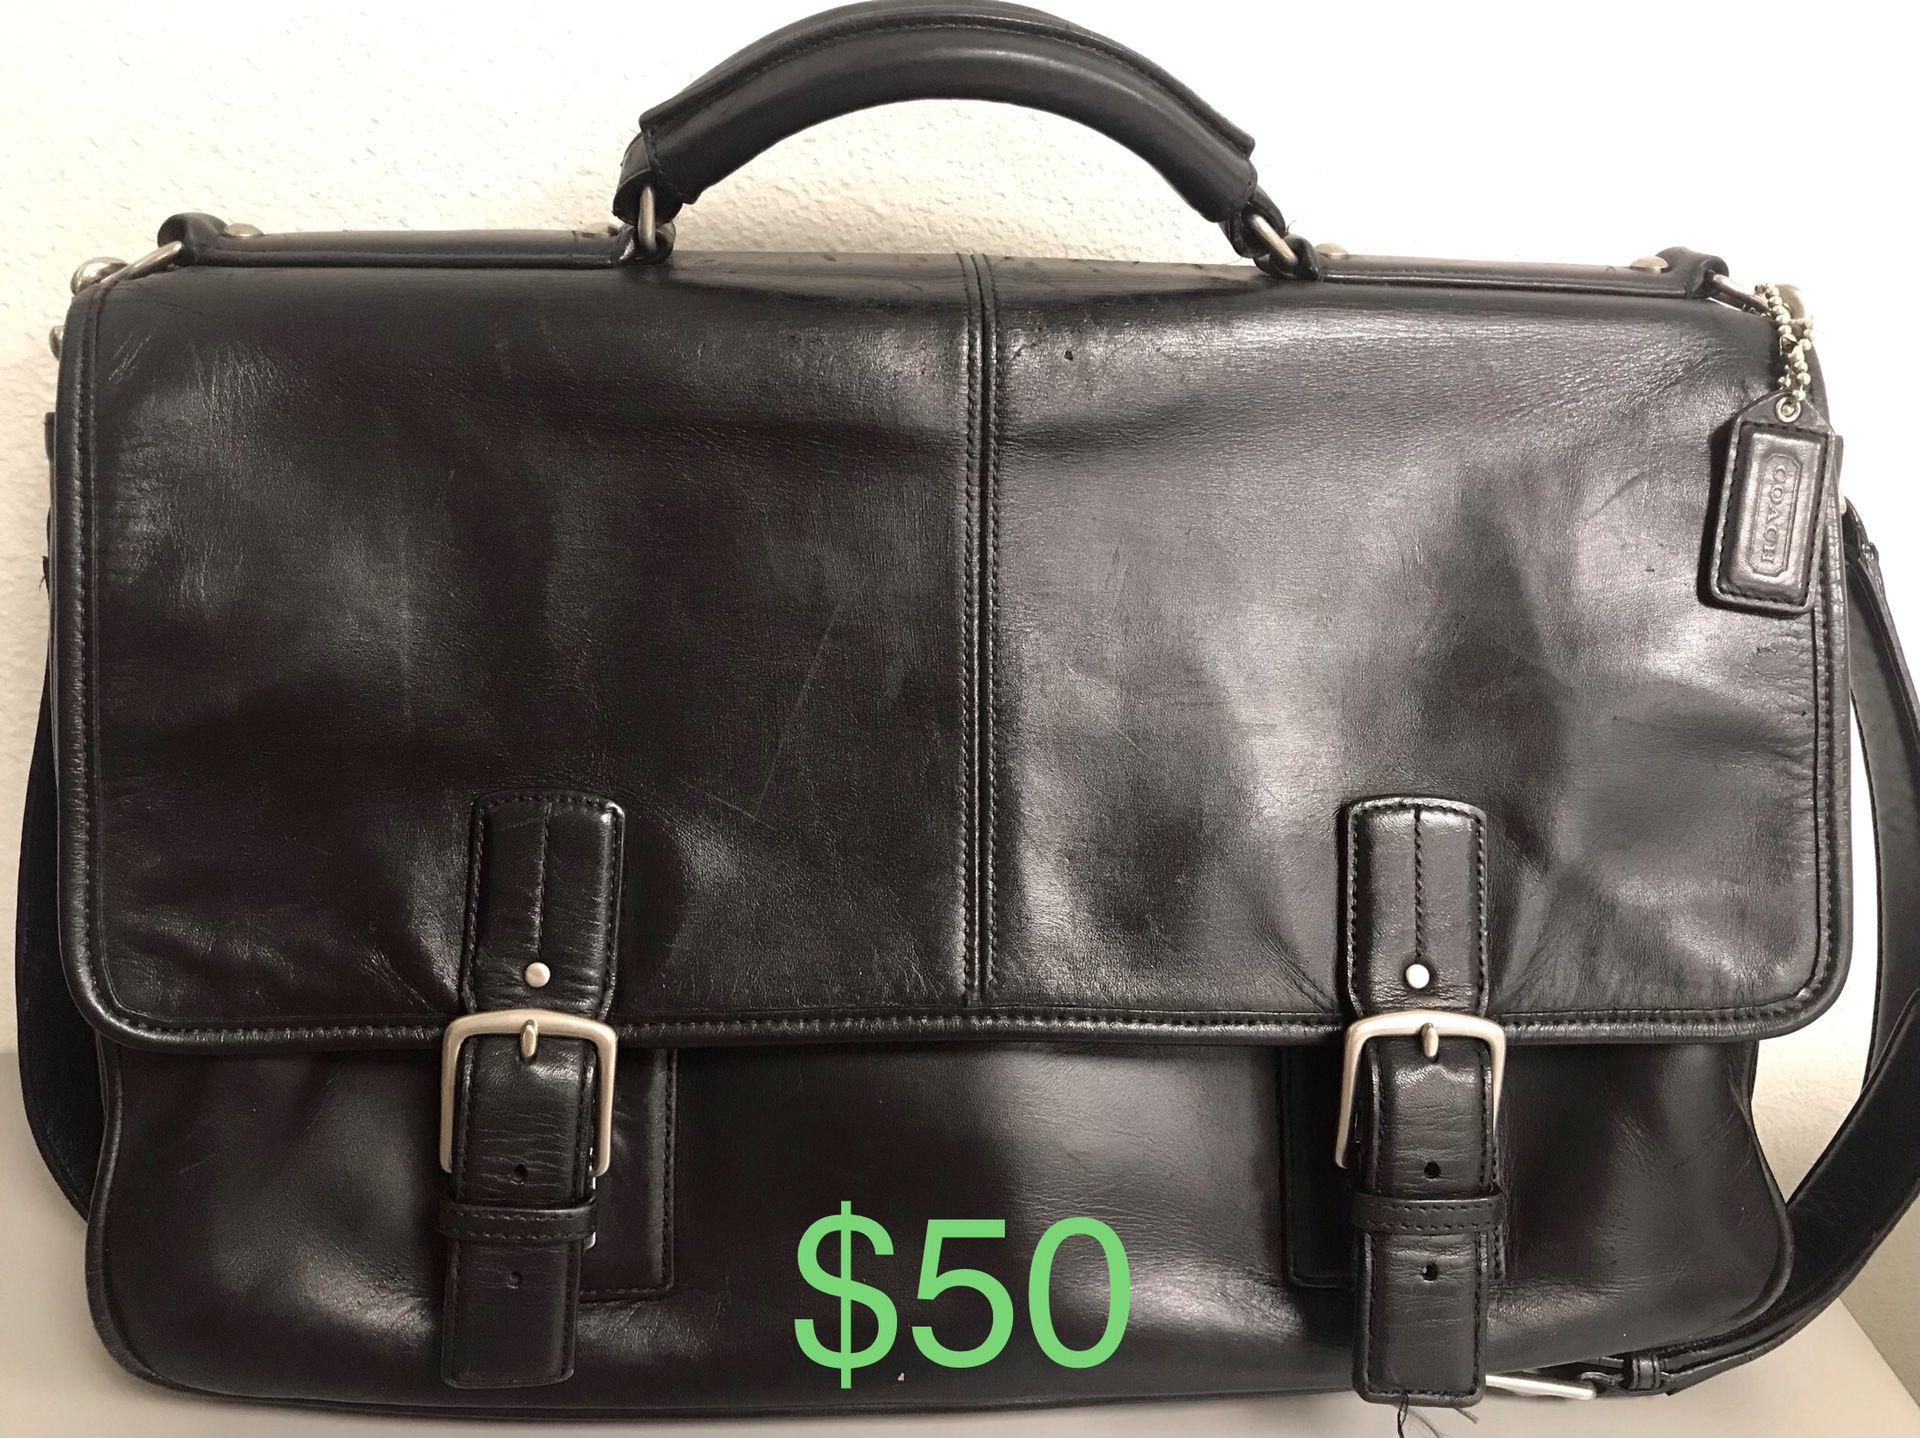 Black coach Laptop bag